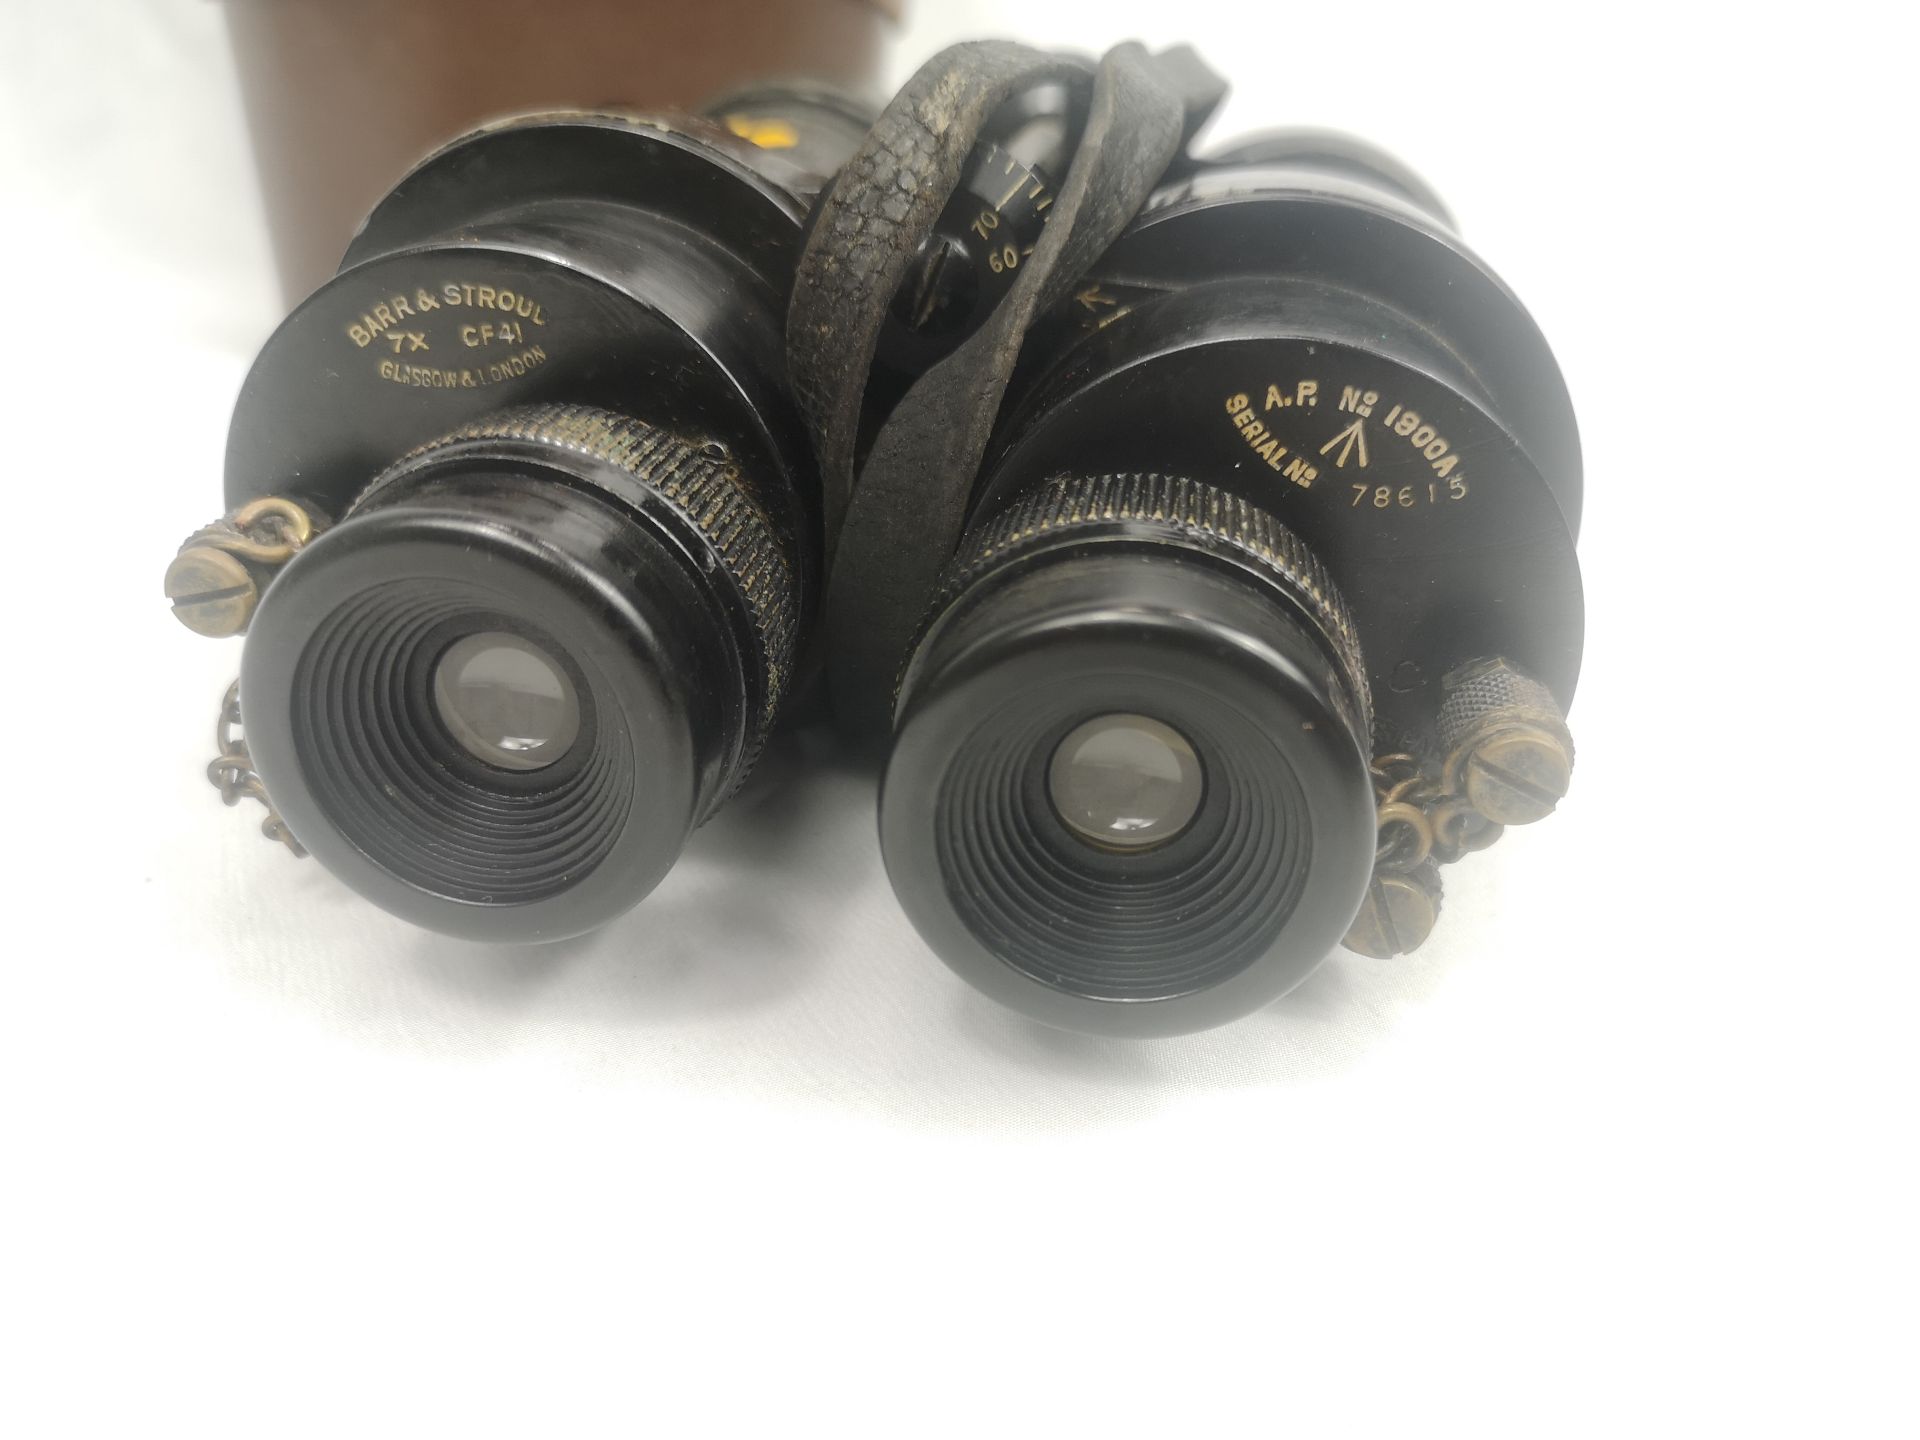 Pair of Barr and Stroud 7x binoculars - Bild 5 aus 5